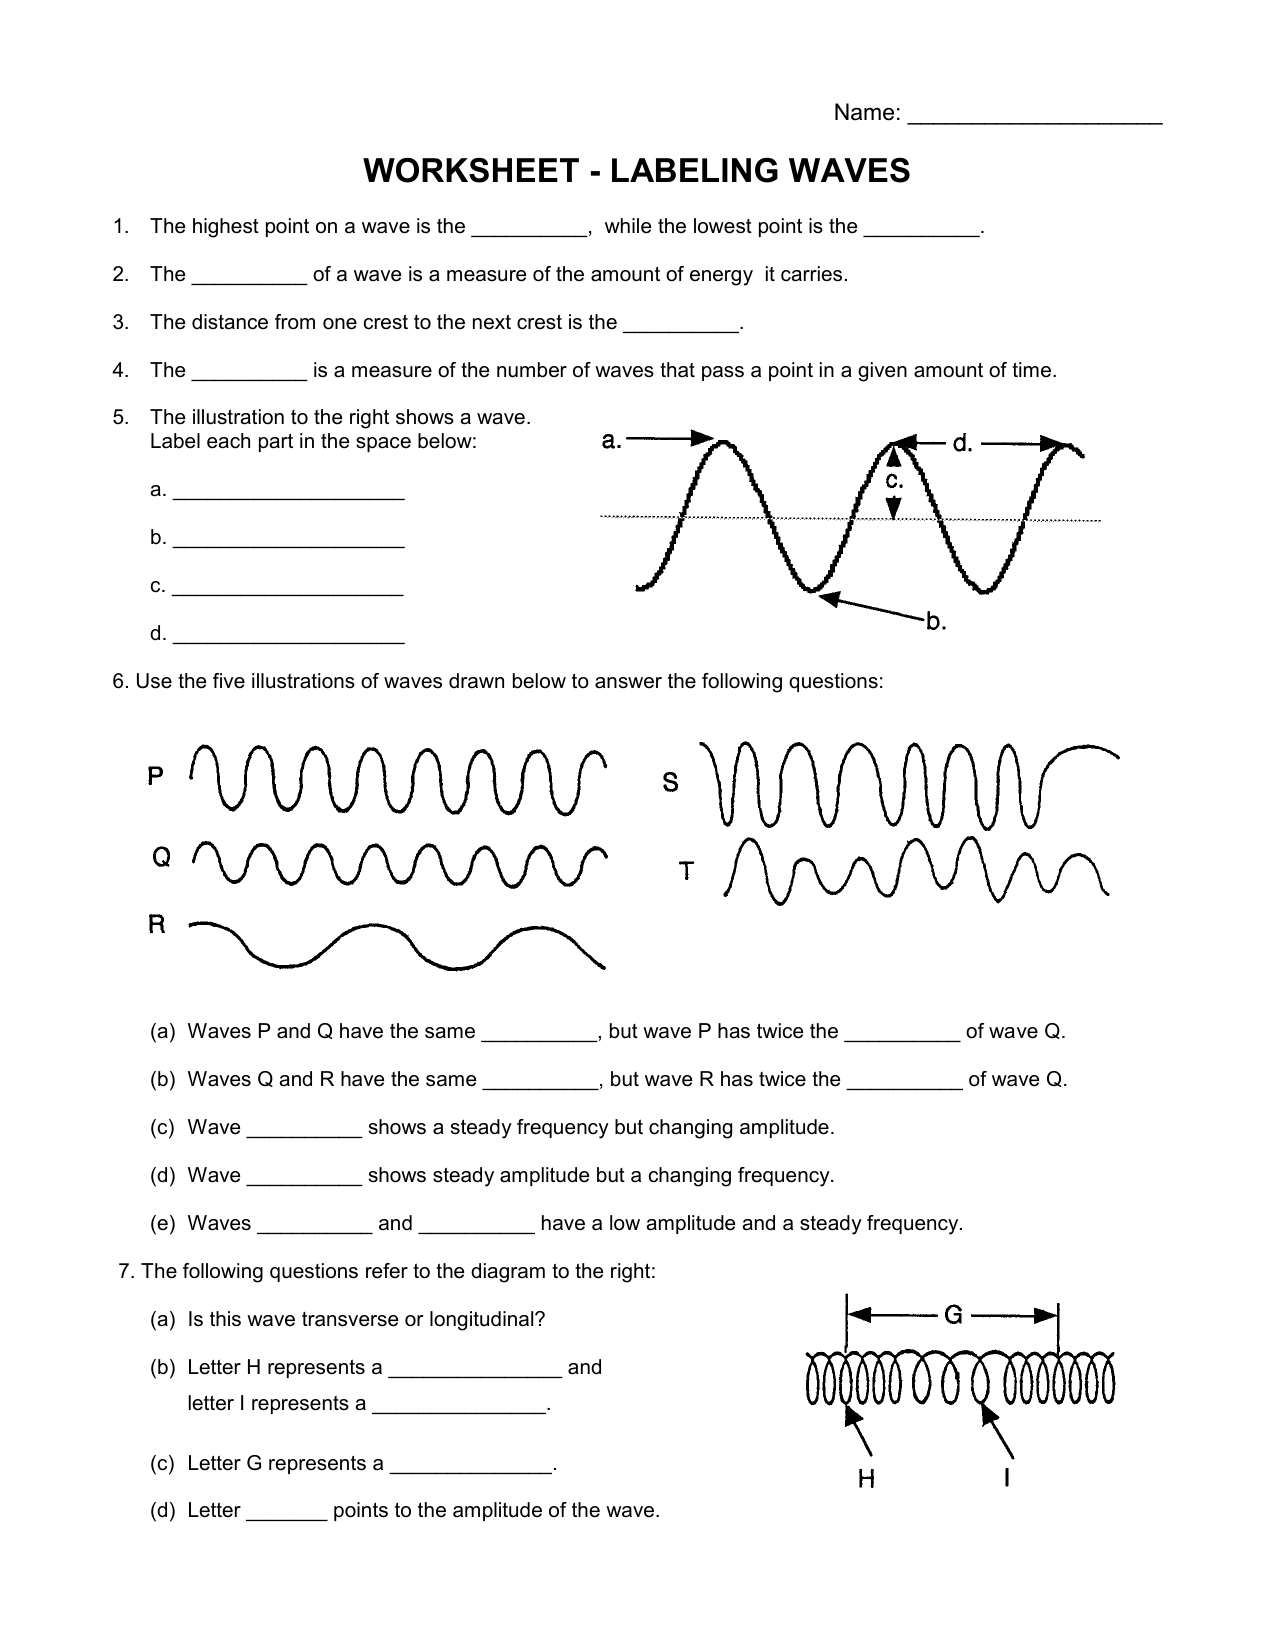 Labeling Waves Worksheet Within Wave Worksheet Answer Key